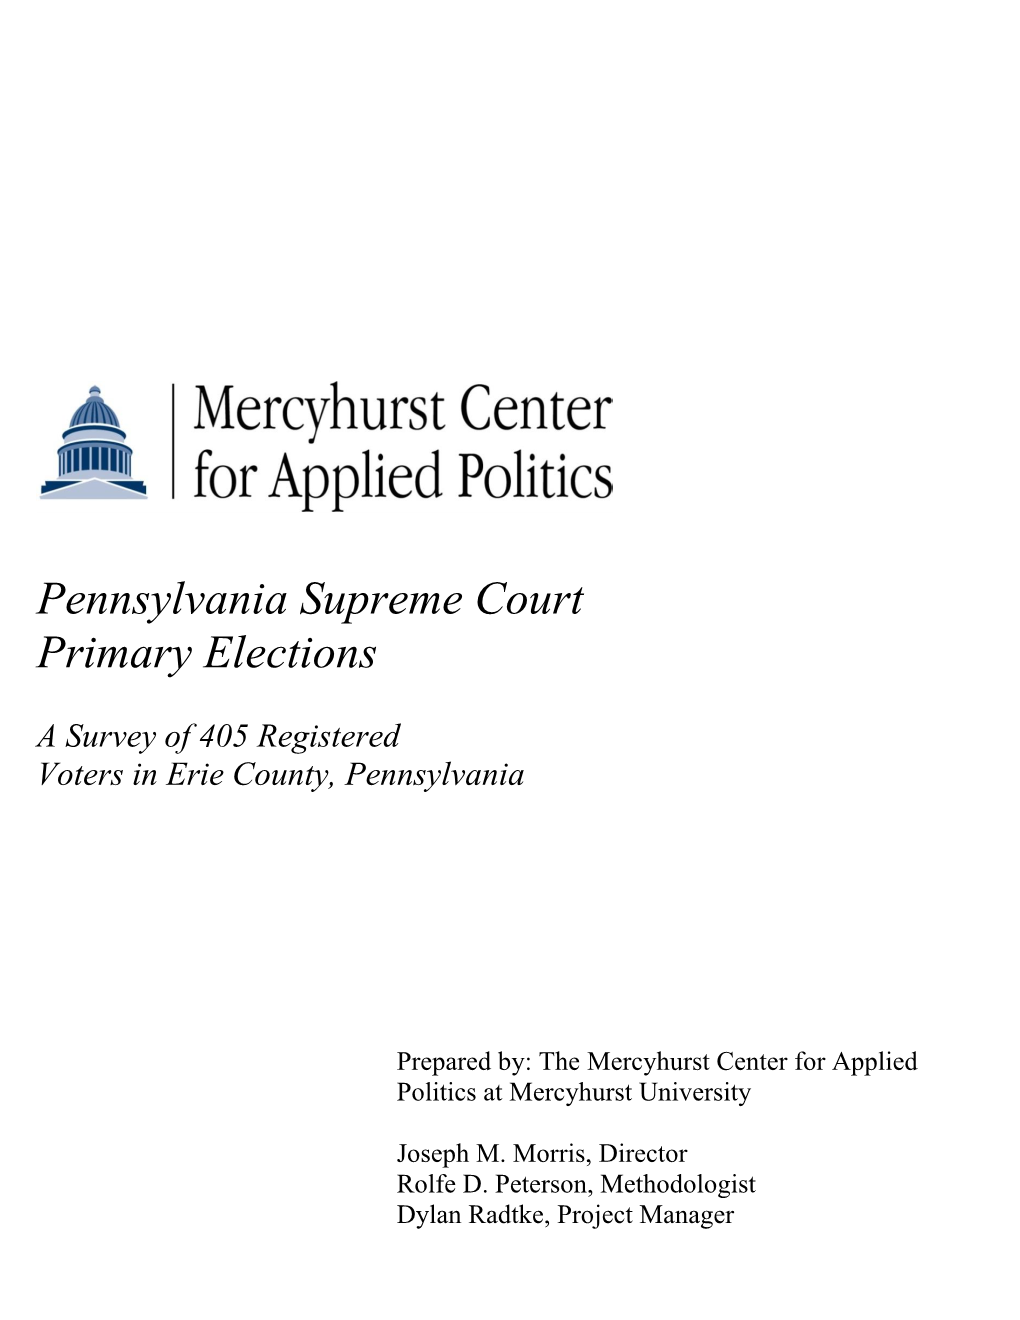 Pennsylvania Supreme Court Primary Elections